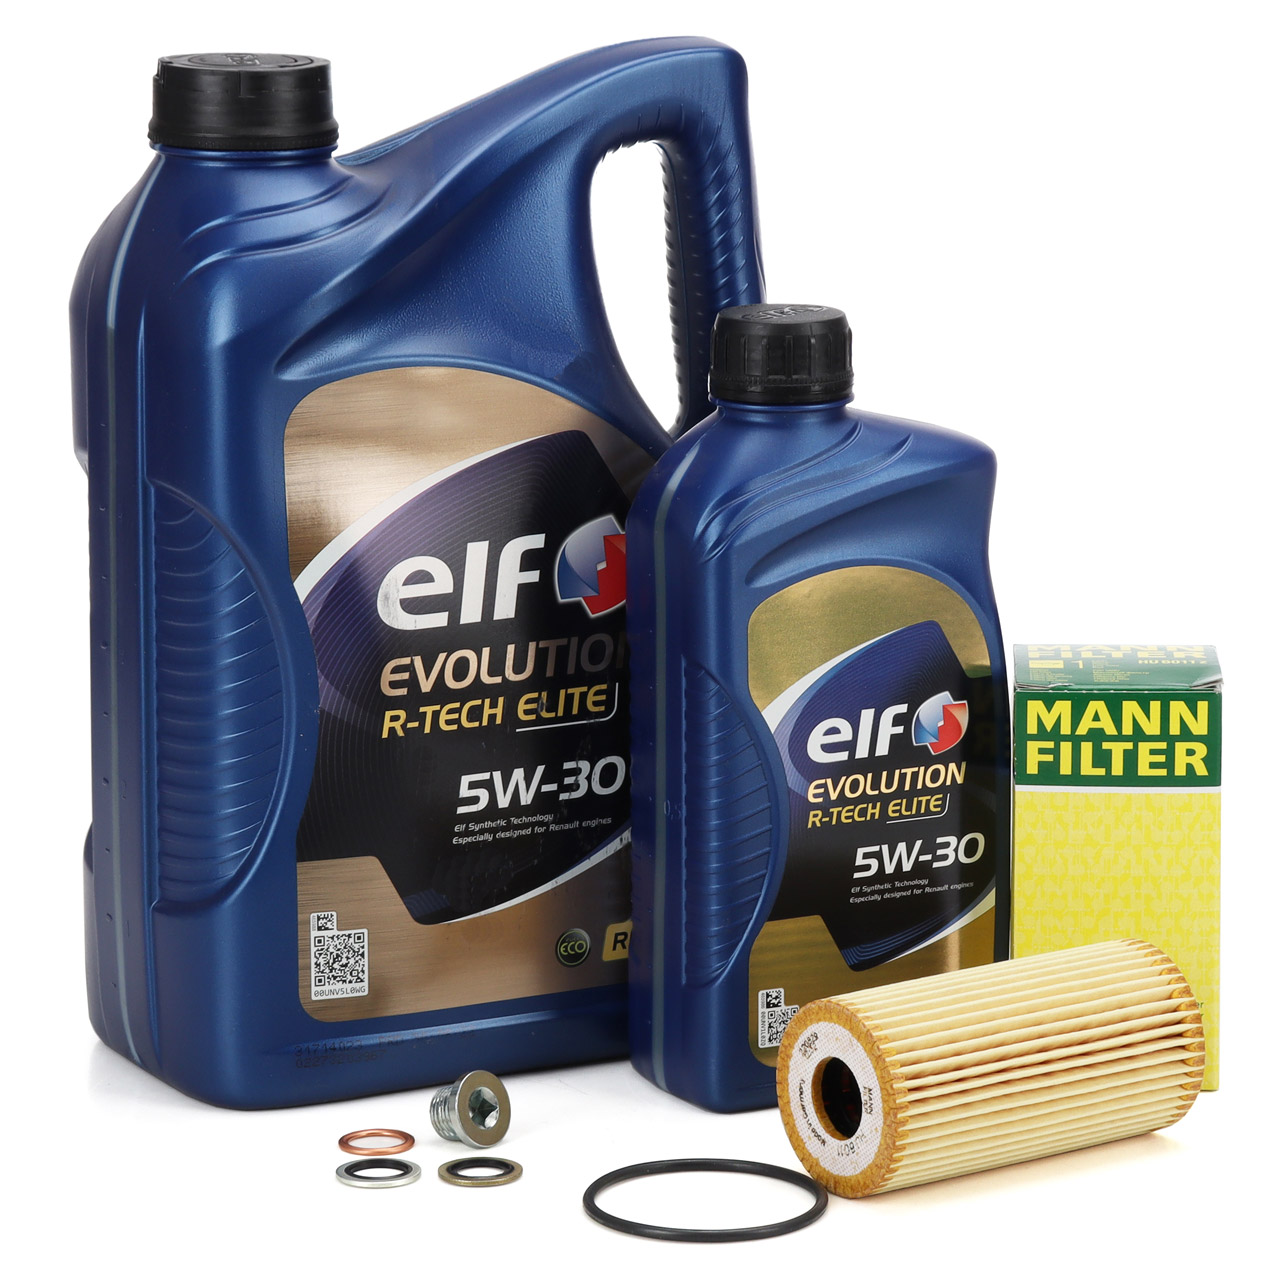 6L elf Evolution R-TECH ELITE 5W-30 Motoröl + MANN Ölfilter RENAULT 1.6/1.7/1.8 dCi